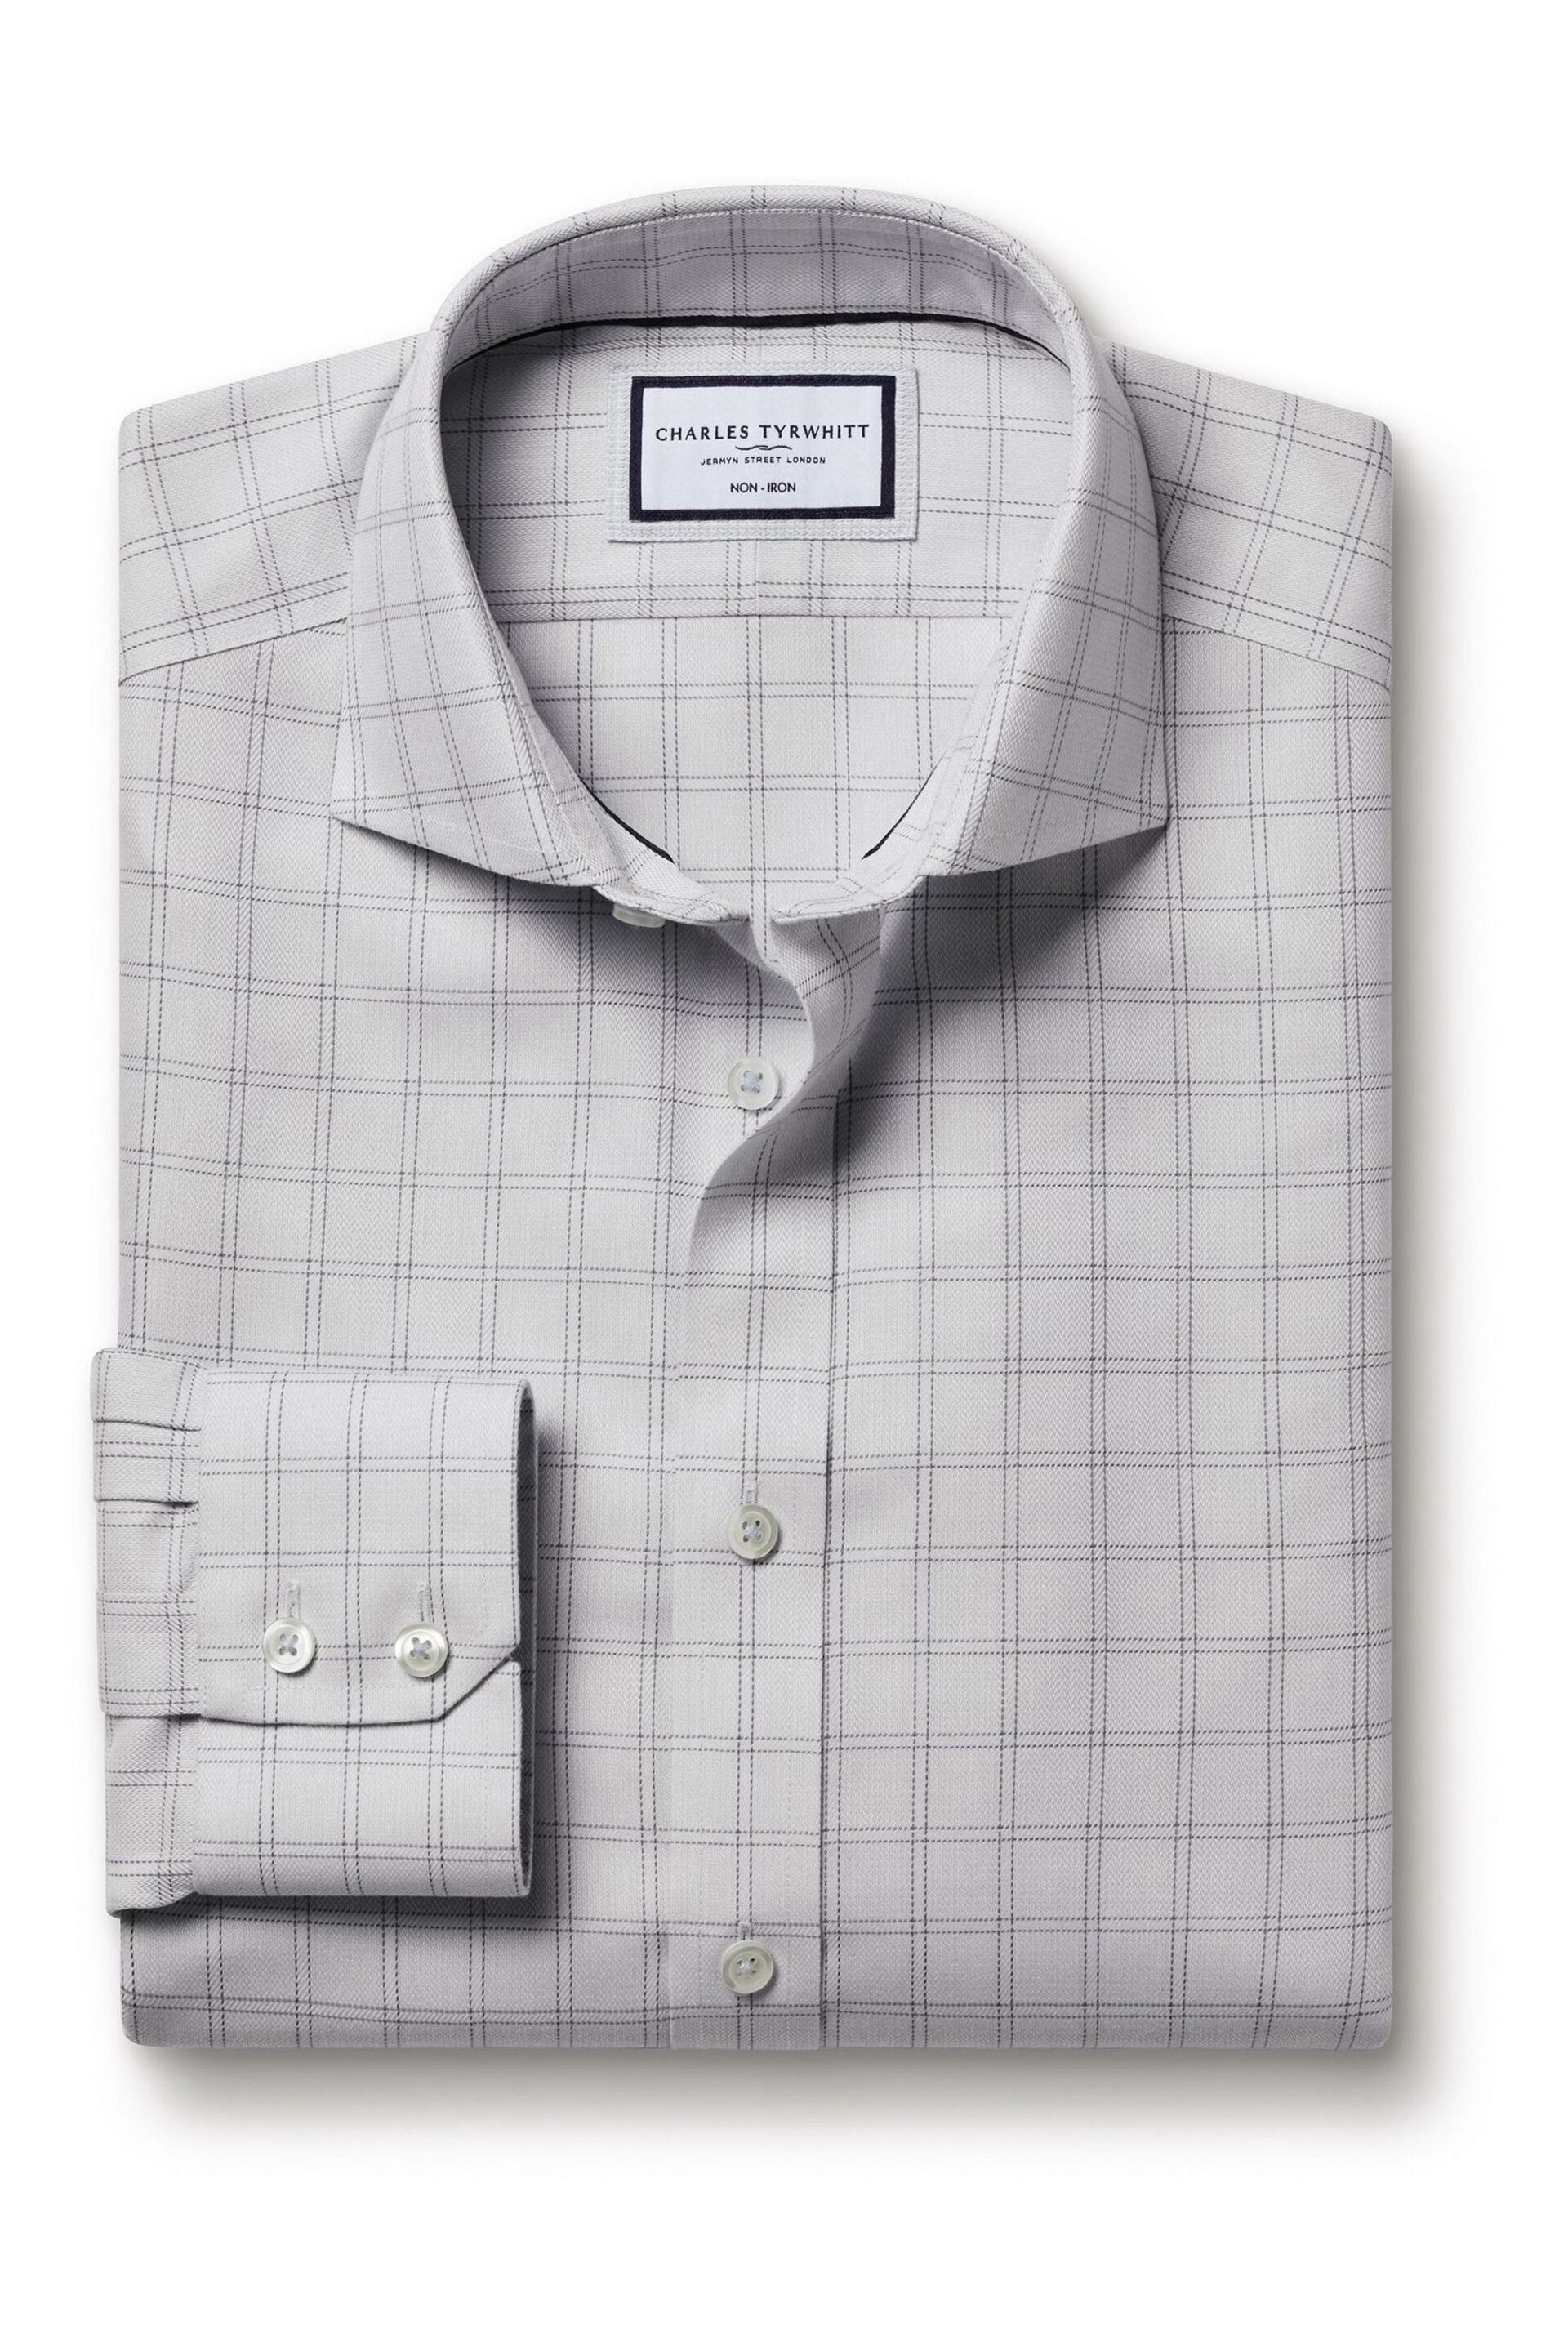 Charles Tyrwhitt Grey Non-iron Mayfair Weave Cutaway Slim Fit Shirt - Image 4 of 6